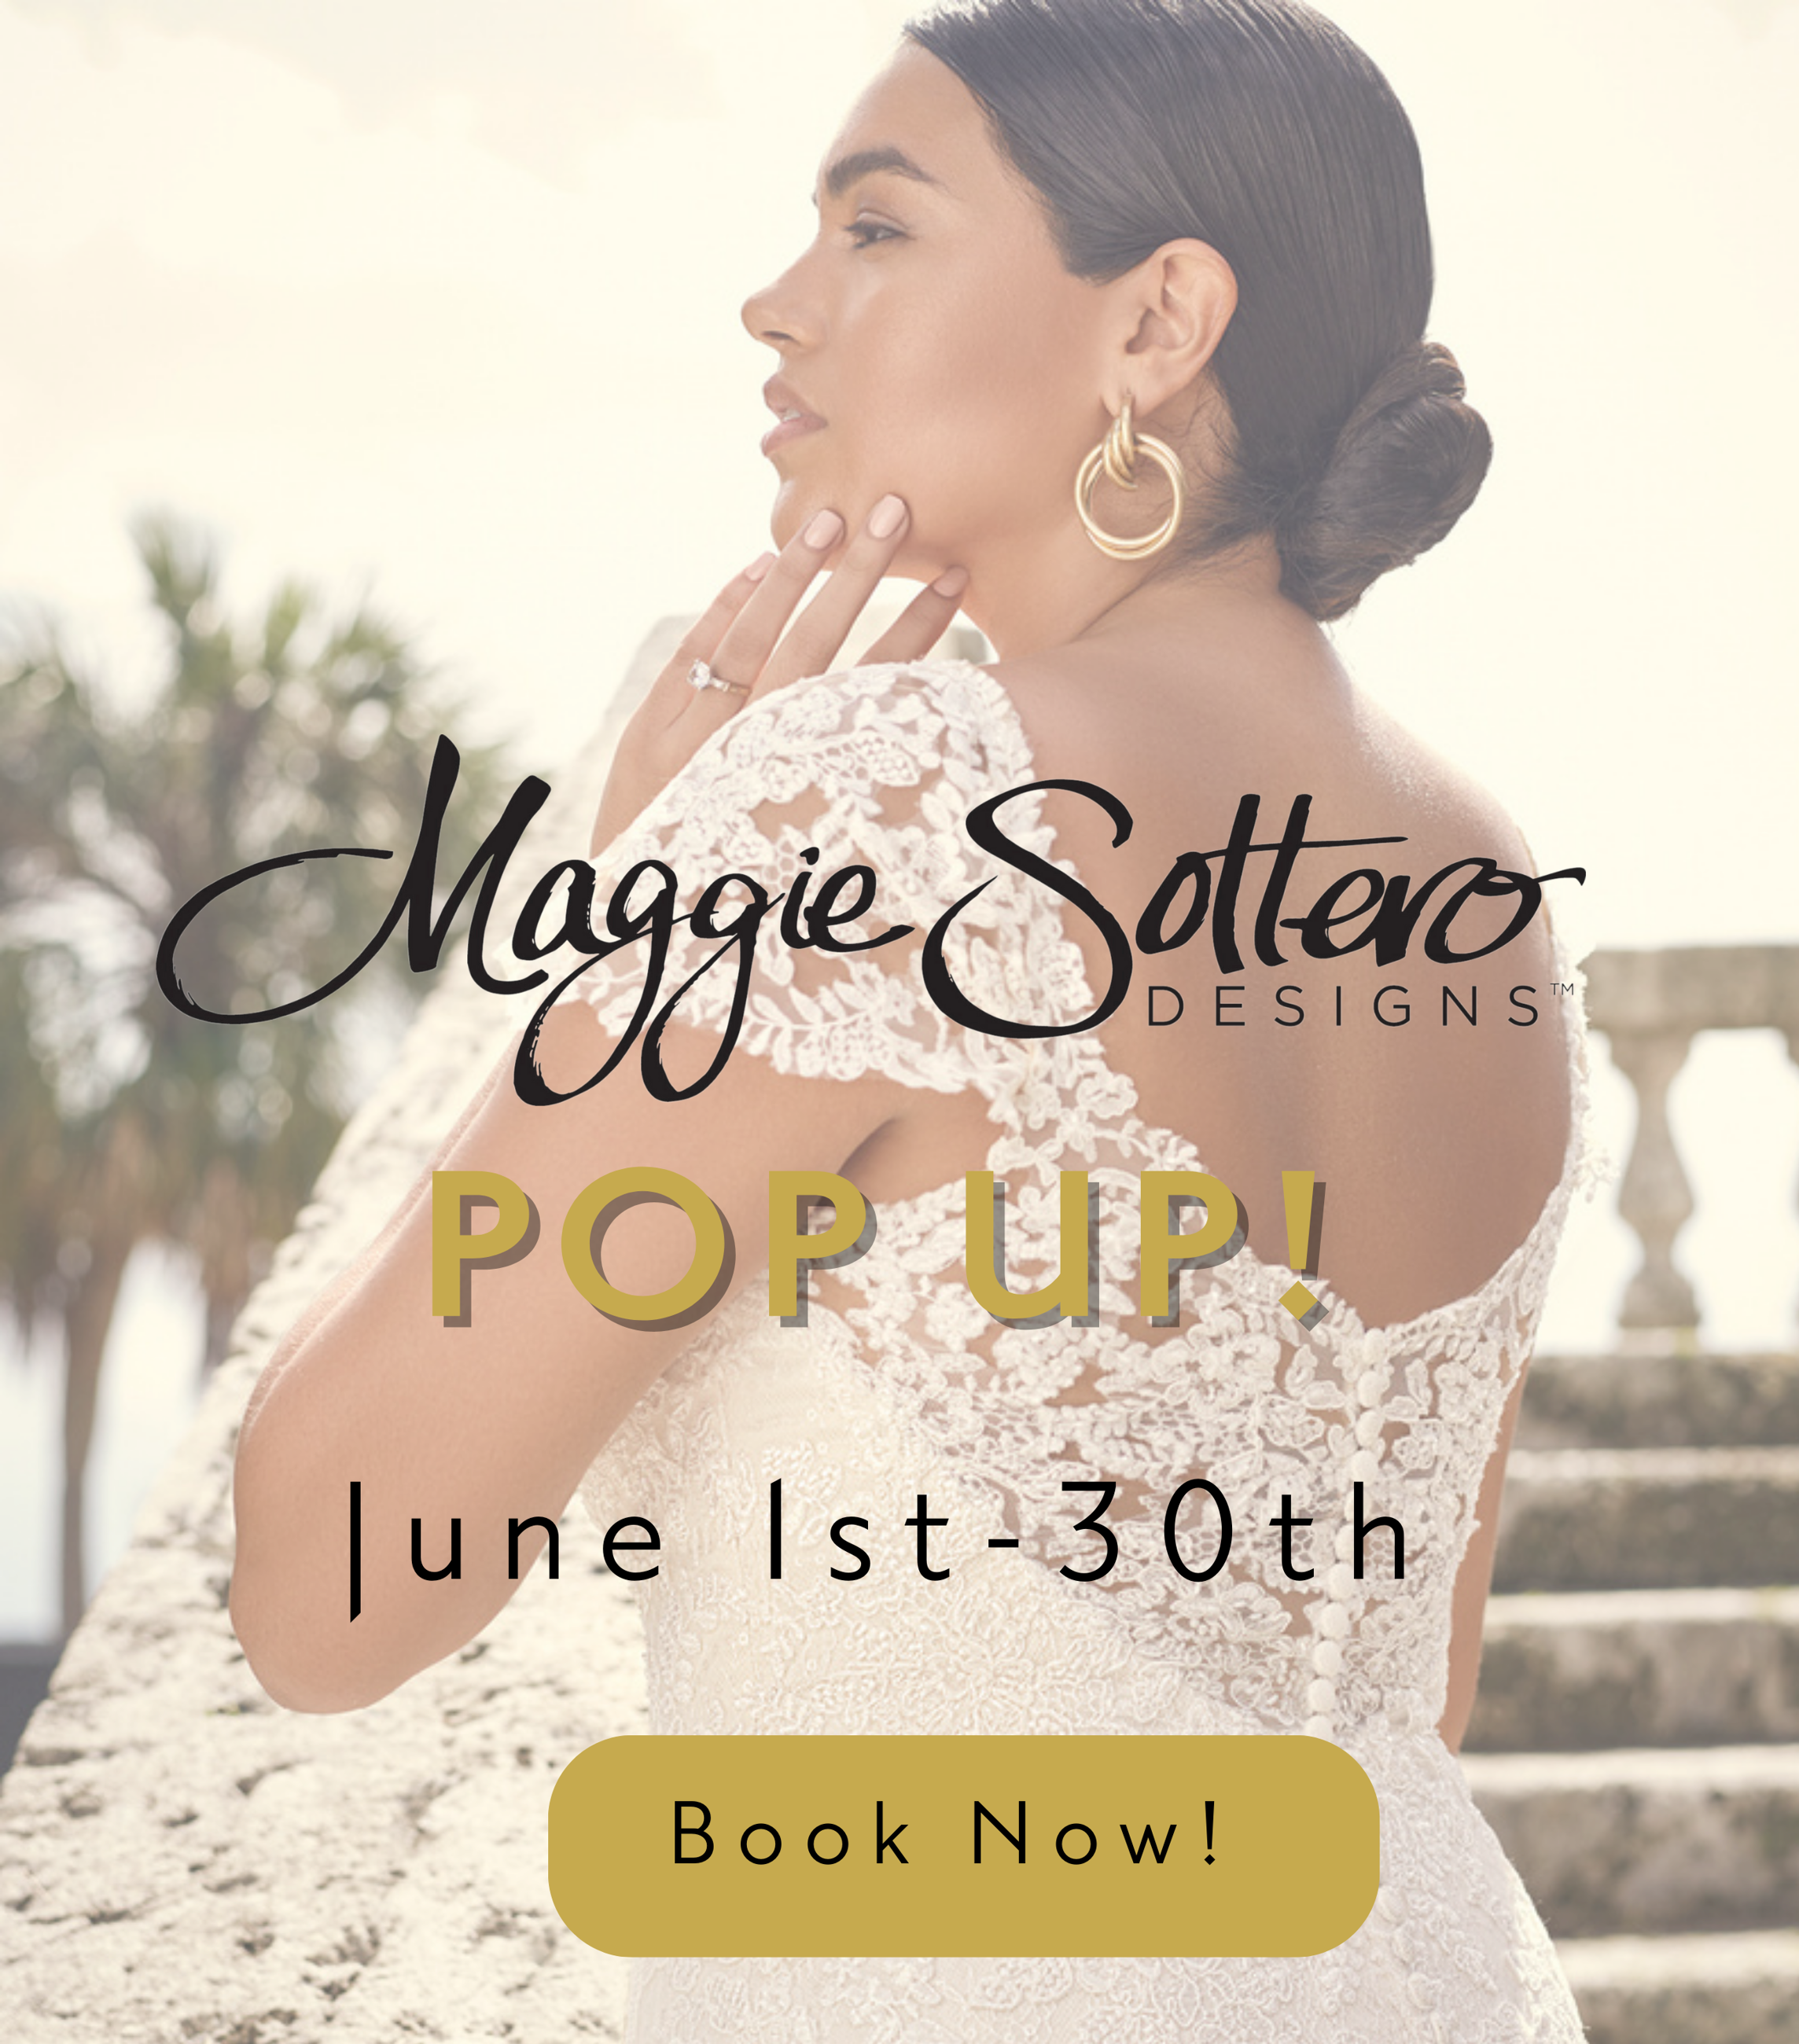 Maggie Sottero Pop Up_ June 1-30_Book appt